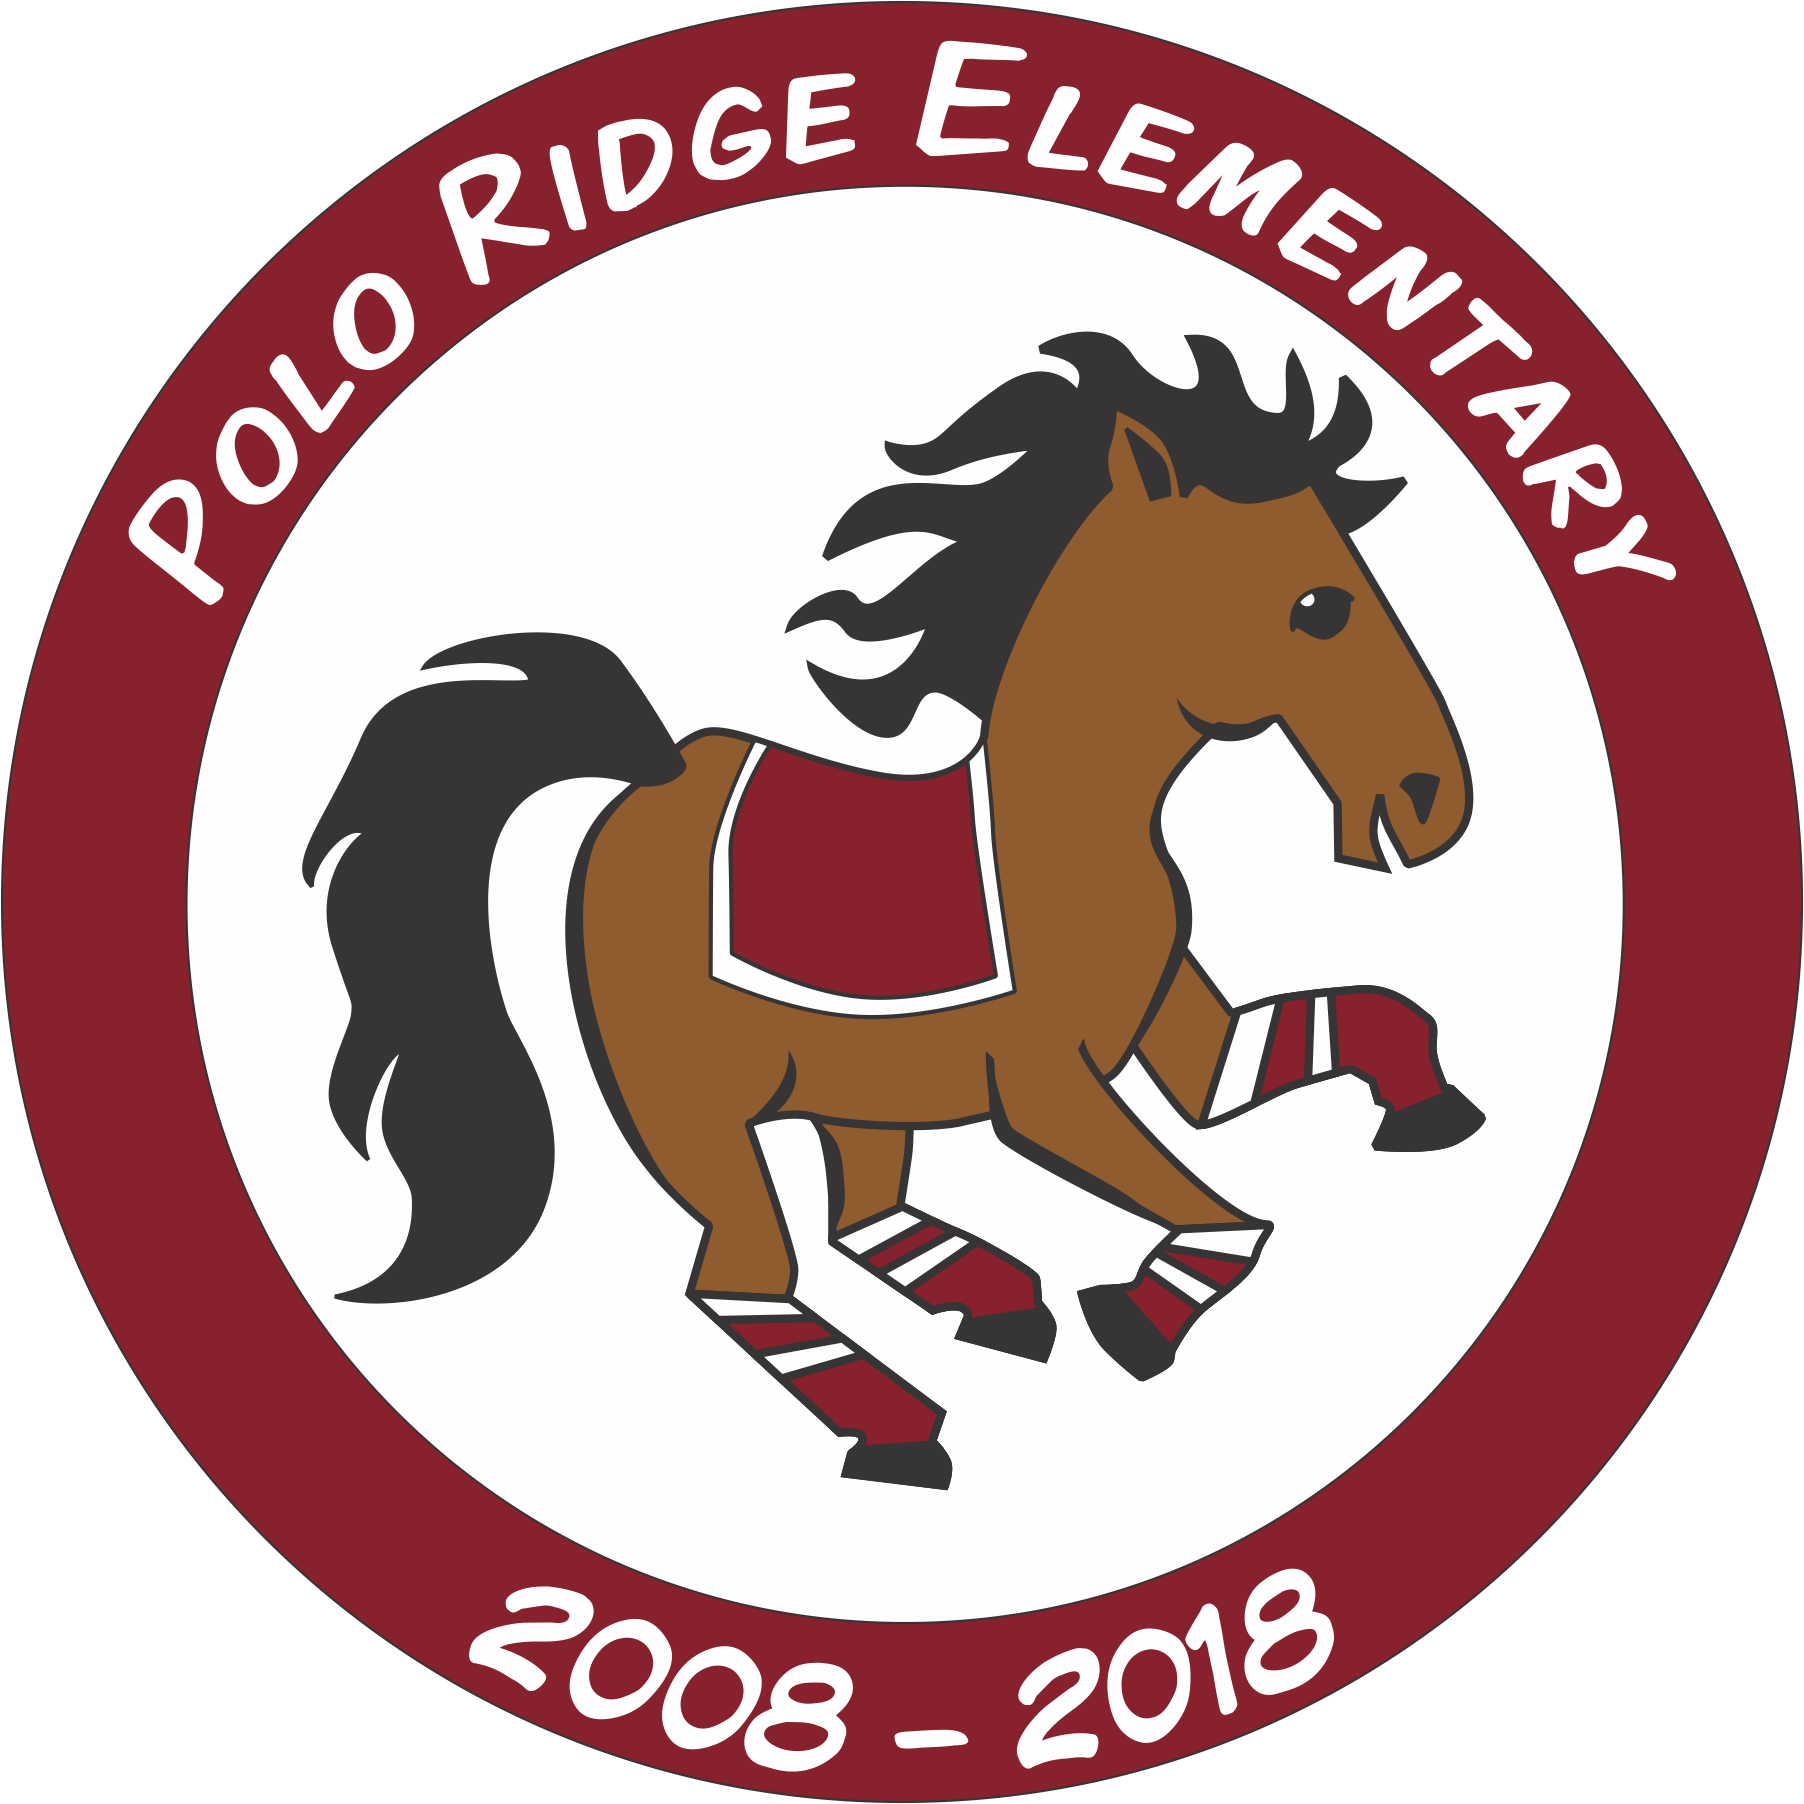 Polo Ridge Circle - Polo Ridge Elementary School Logo (1804x1804), Png Download